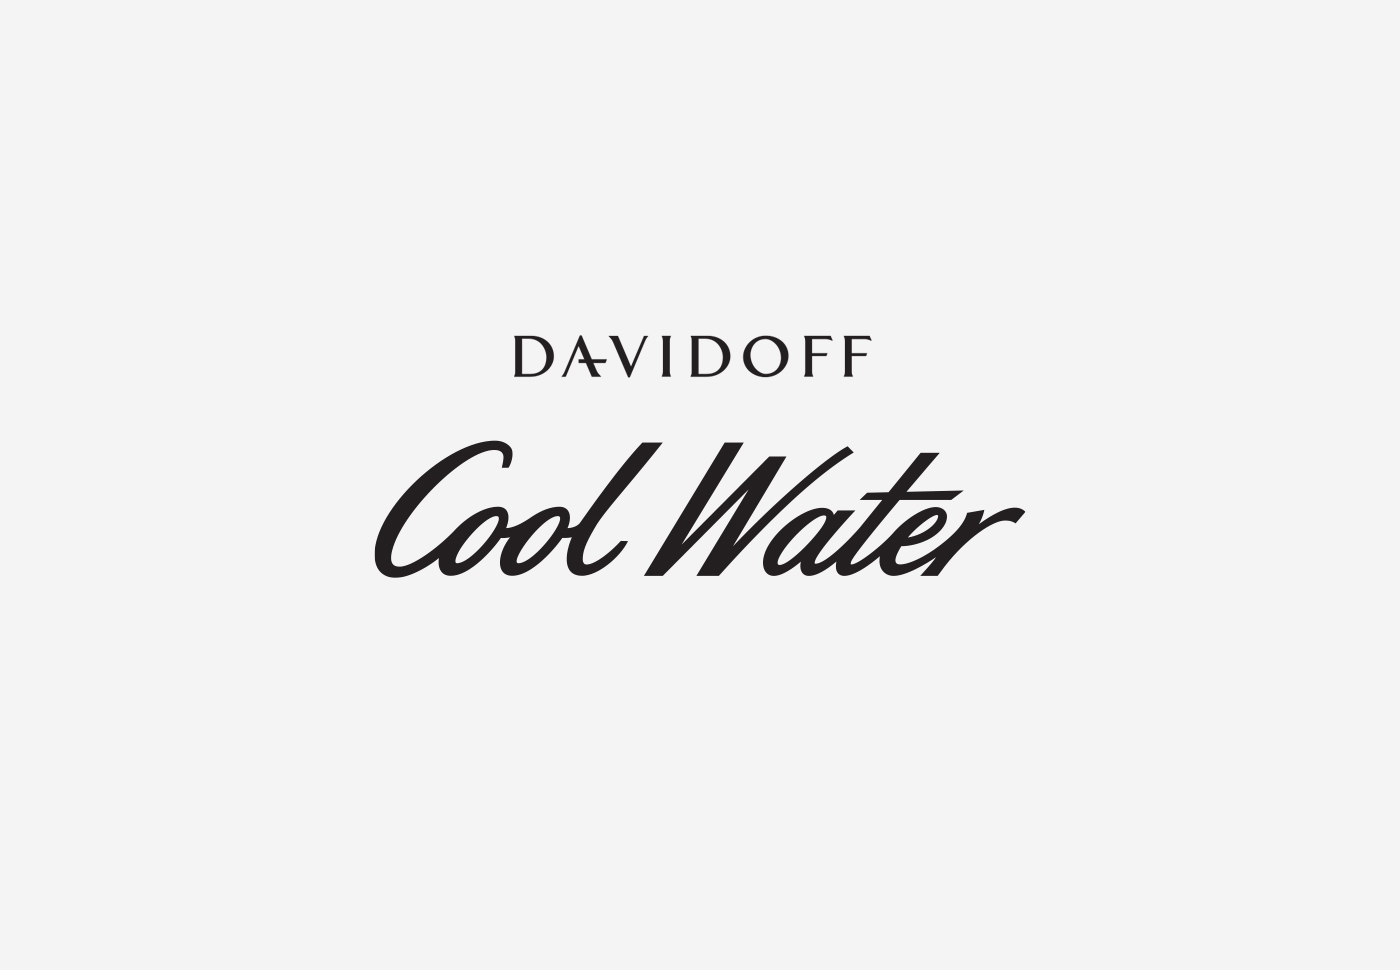 Davidoff – Cool Water revitalised logo